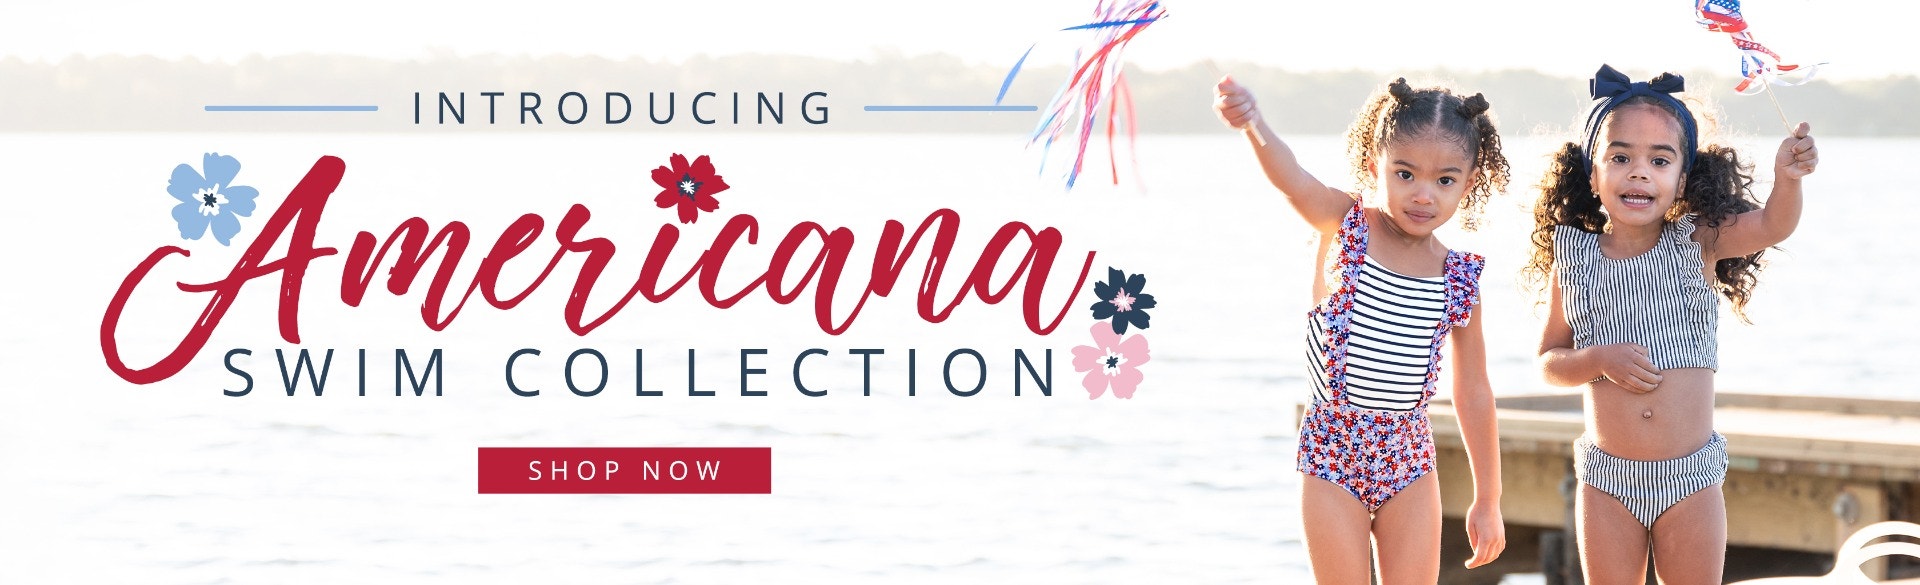 Americana Swim Collection